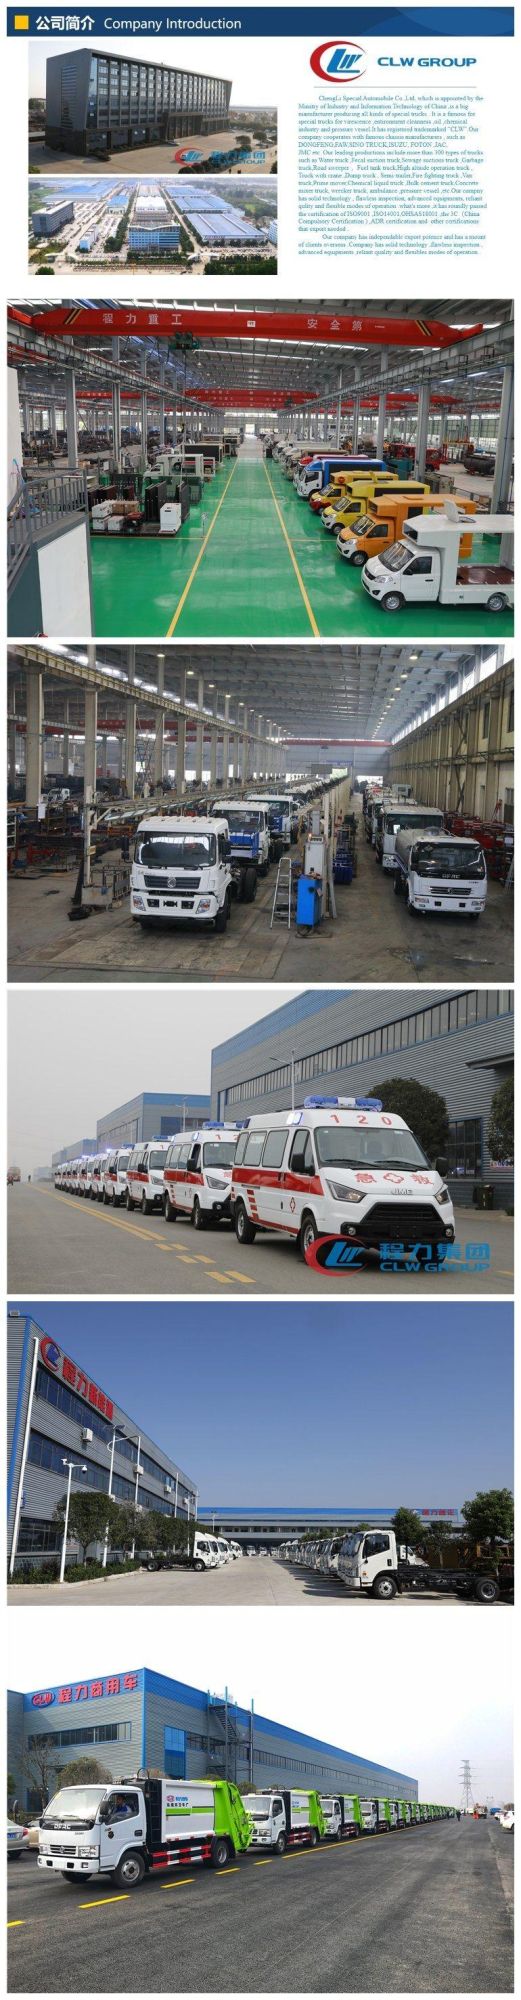 Ambulance for Patient Transport, ICU Ambulance Intensive Care Unit Ambulance Factory Directly Sales